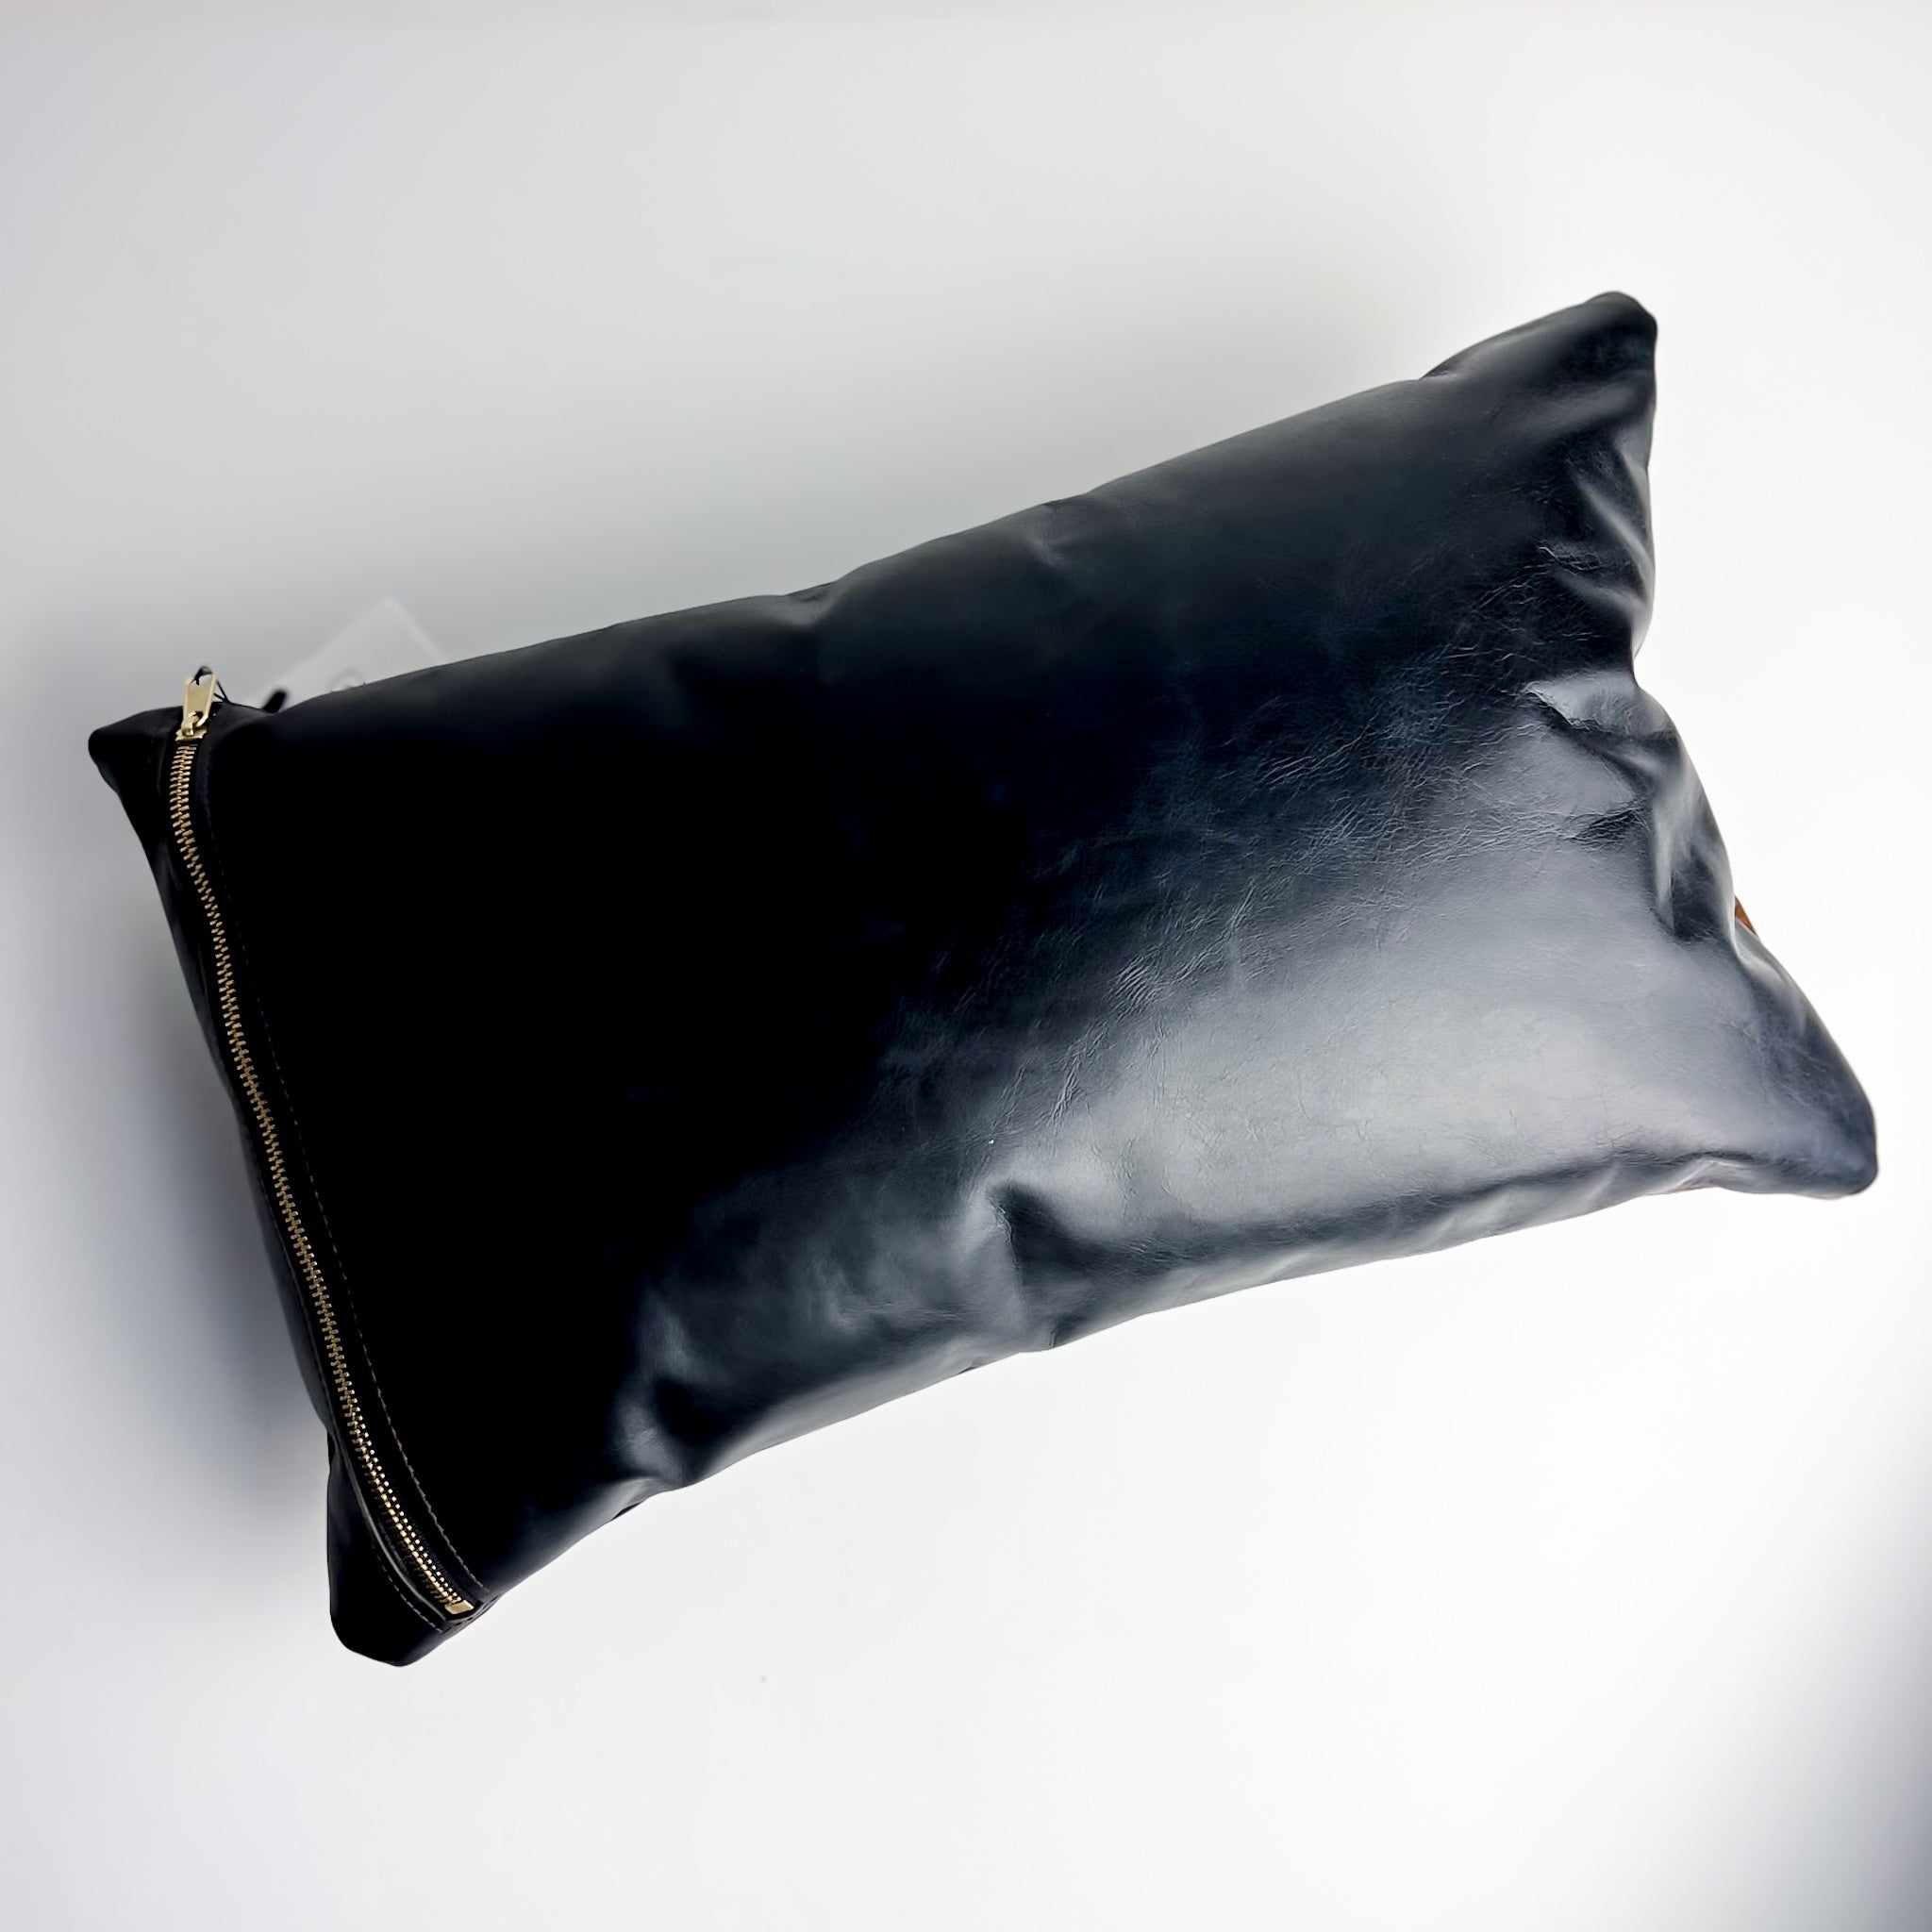 Home Collection | Everyday| Lumbar Pillow